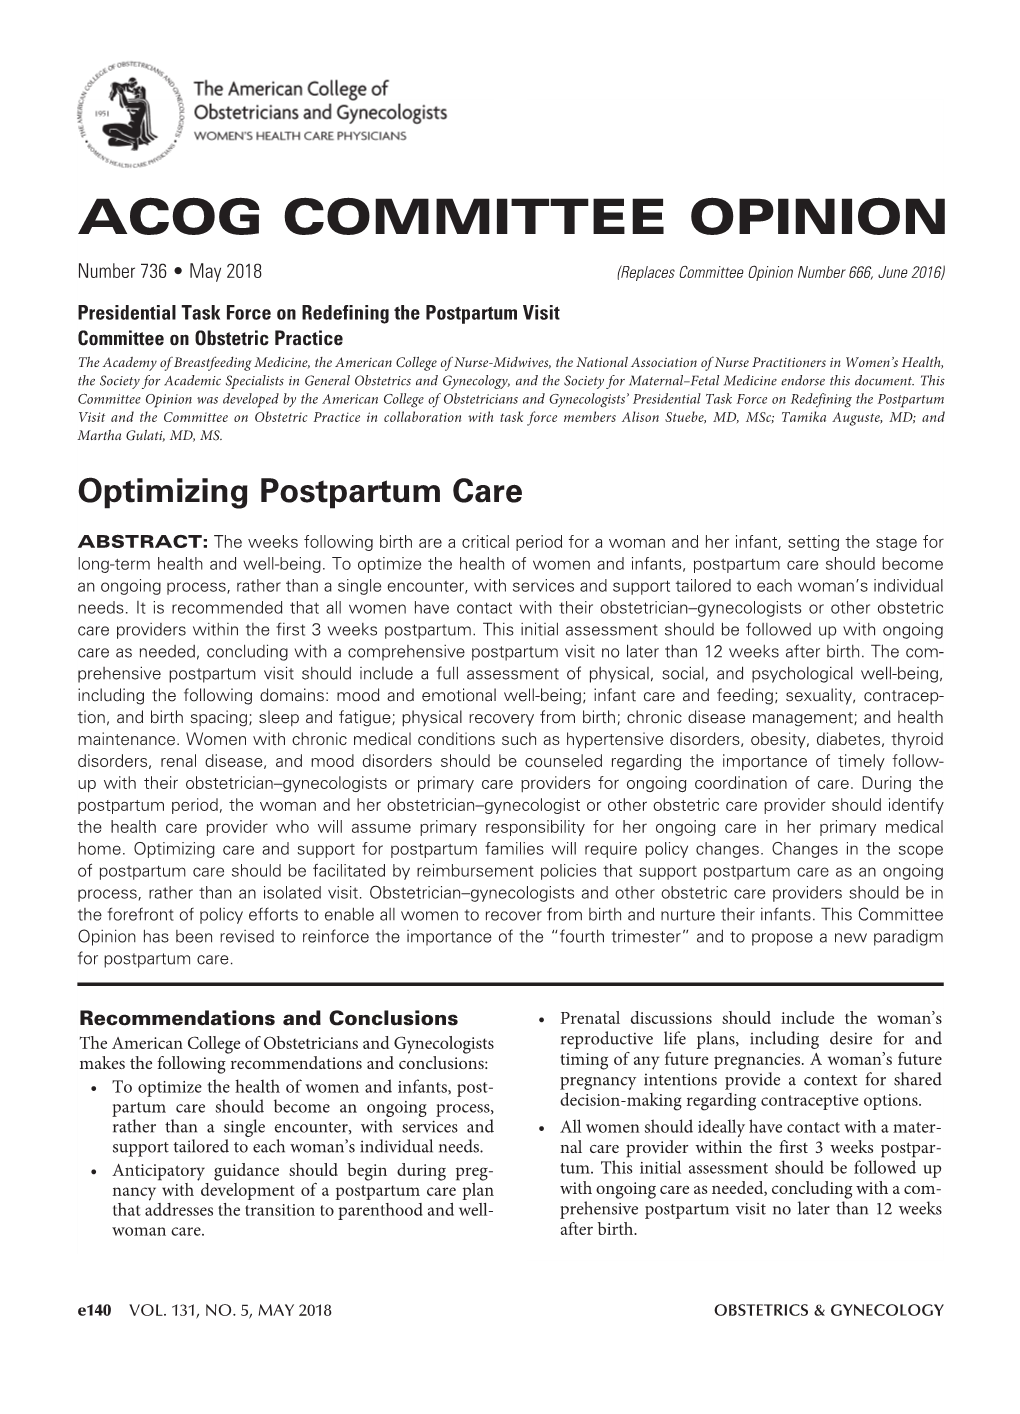 ACOG Committee Opinion, Optimizing Postpartum Care